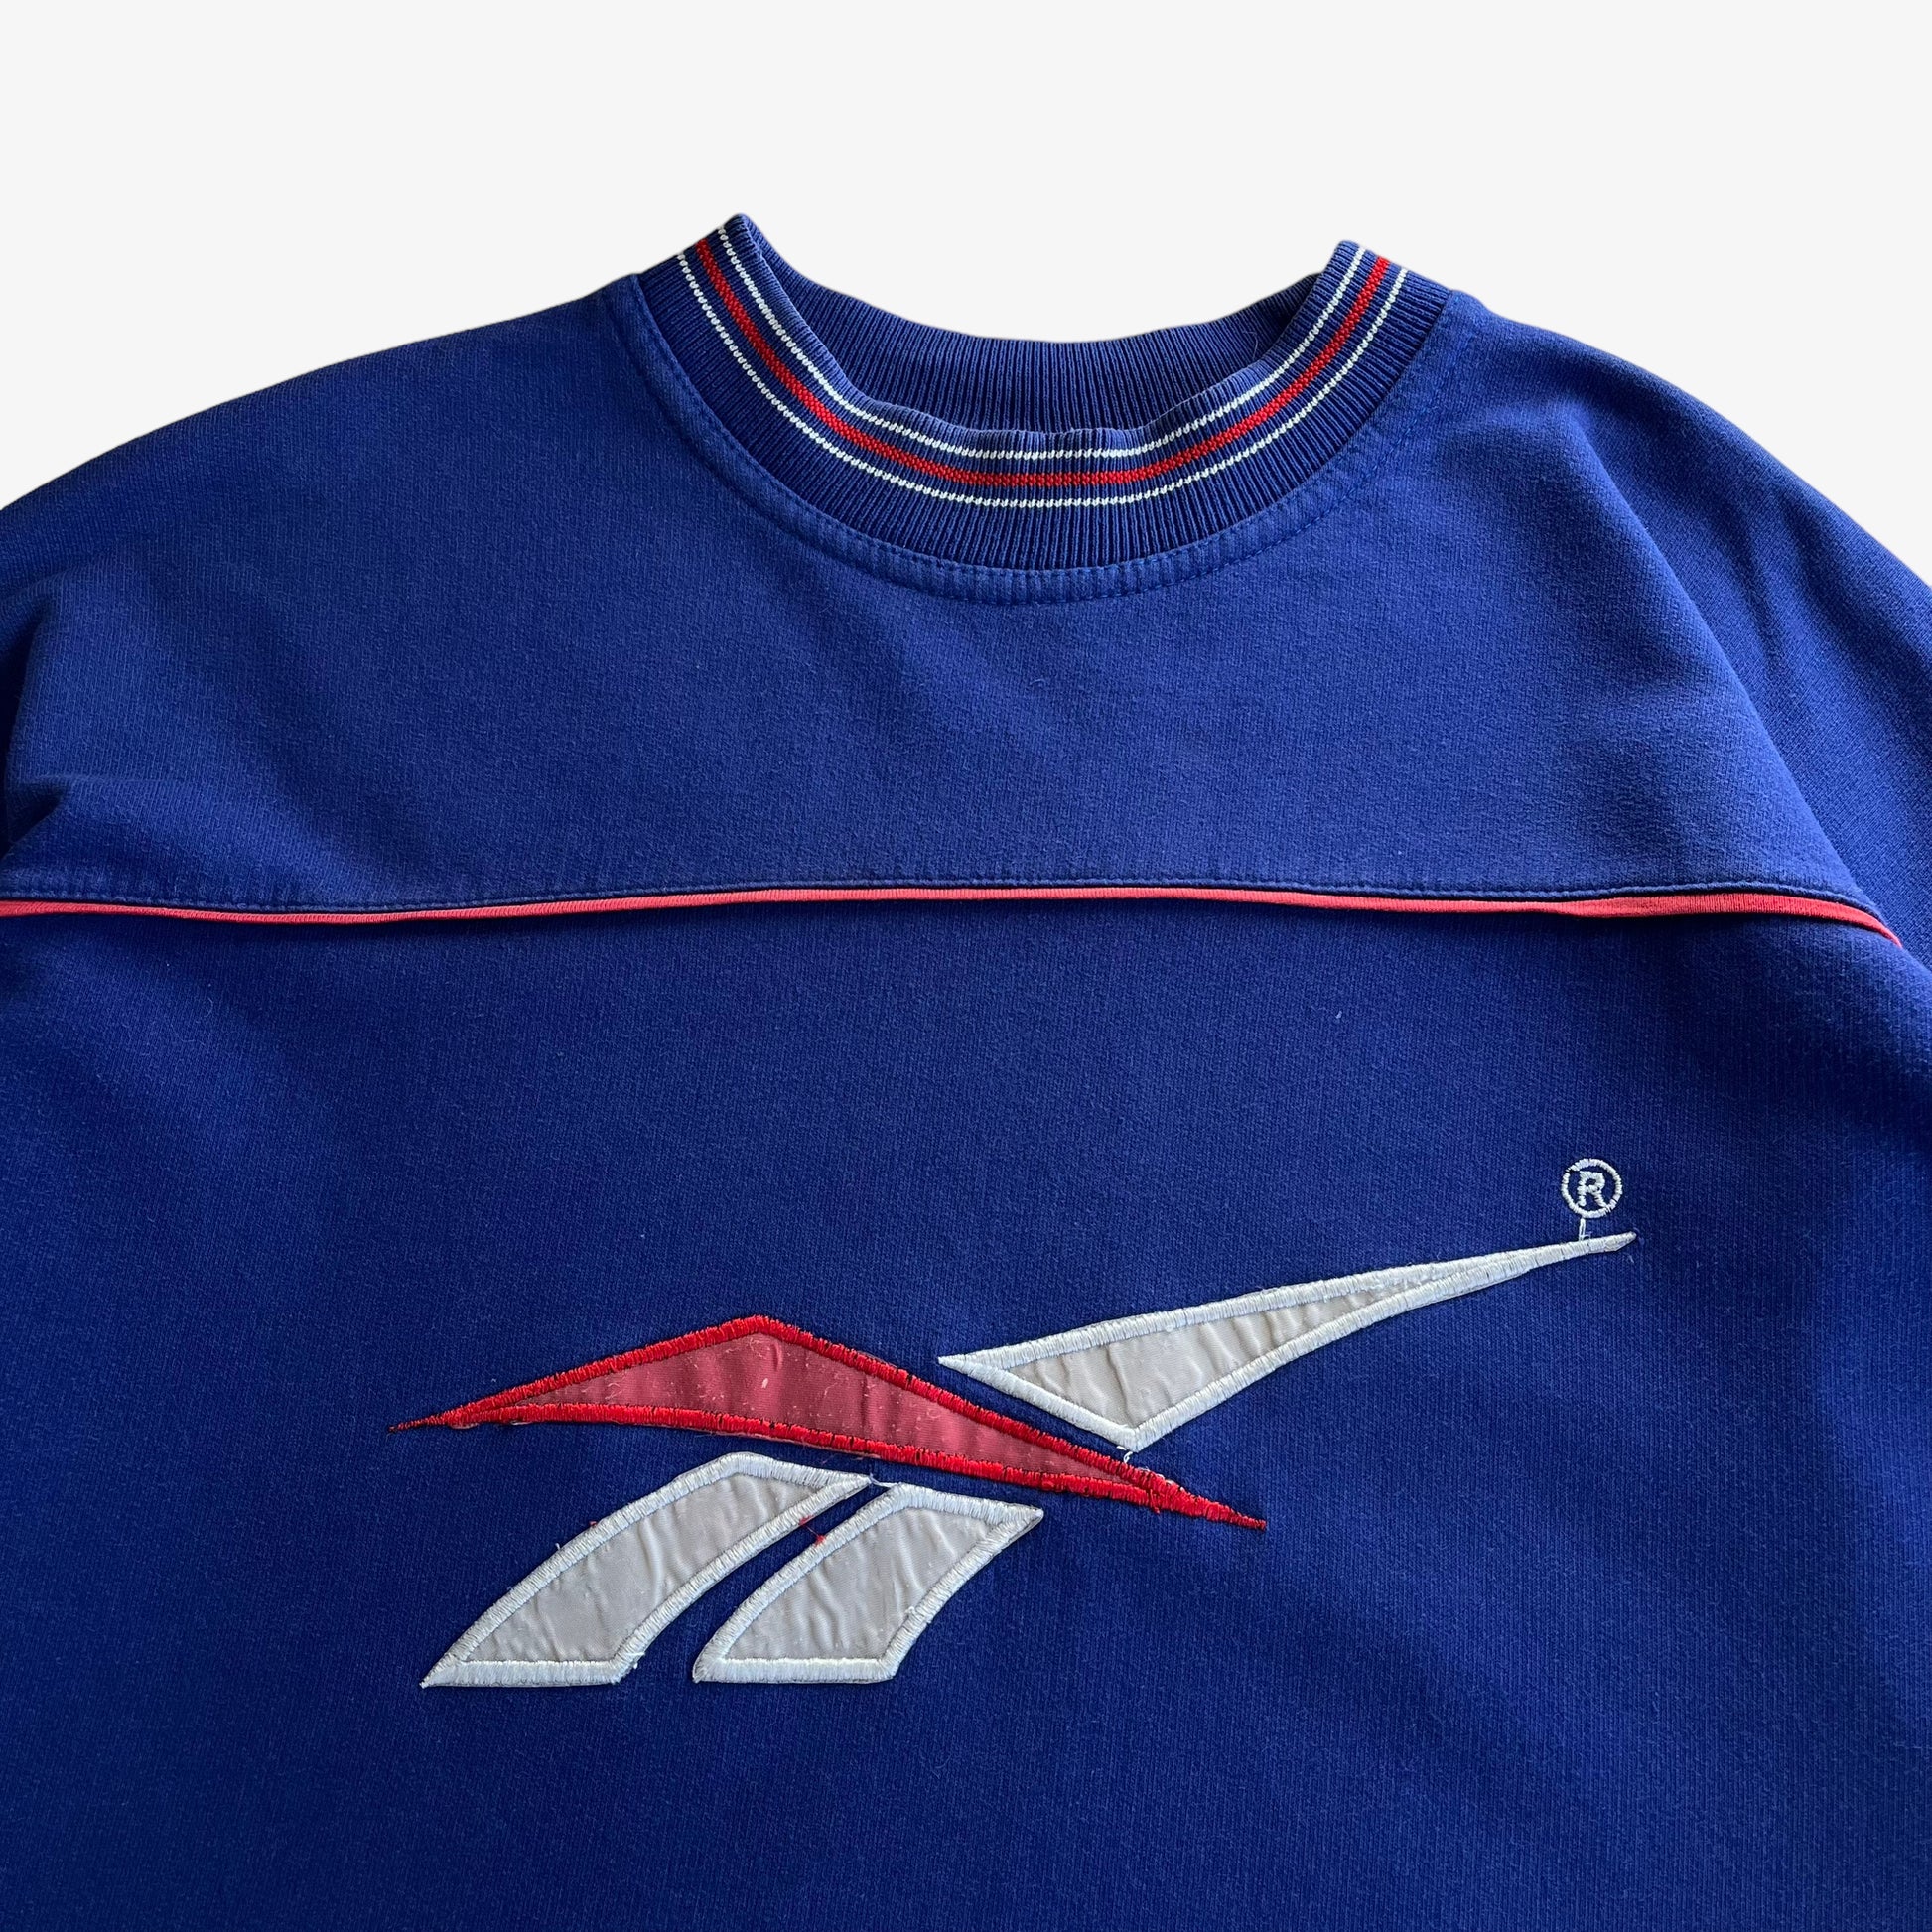 Vintage 90s Reebok Embroidered Spell Out Crewneck Sweatshirt Logo - Casspios Dream